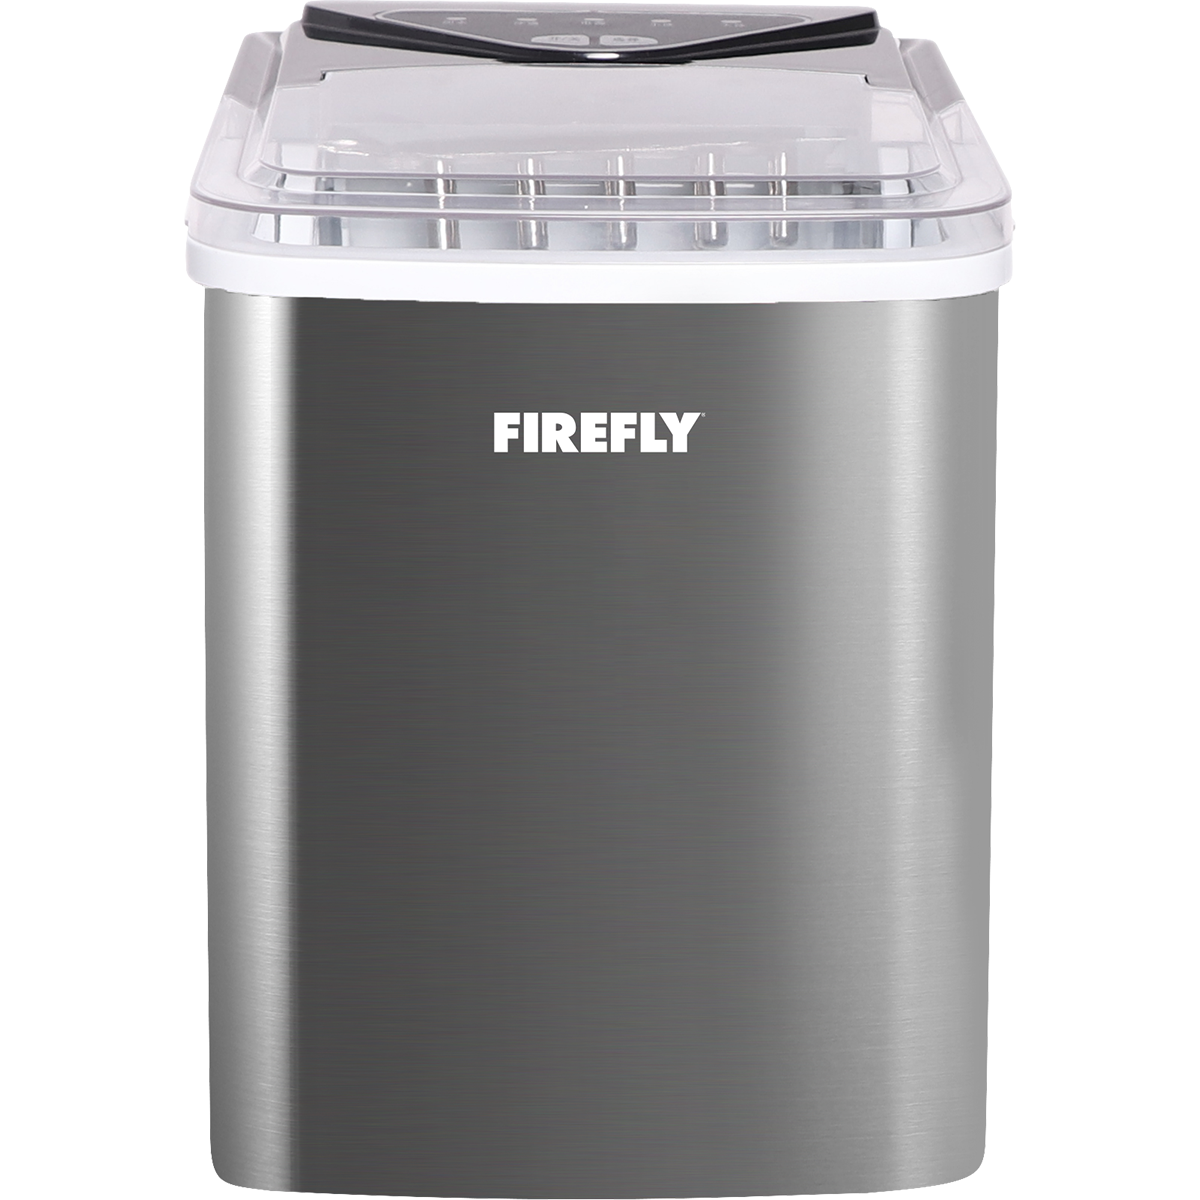 Firefly Ice Maker